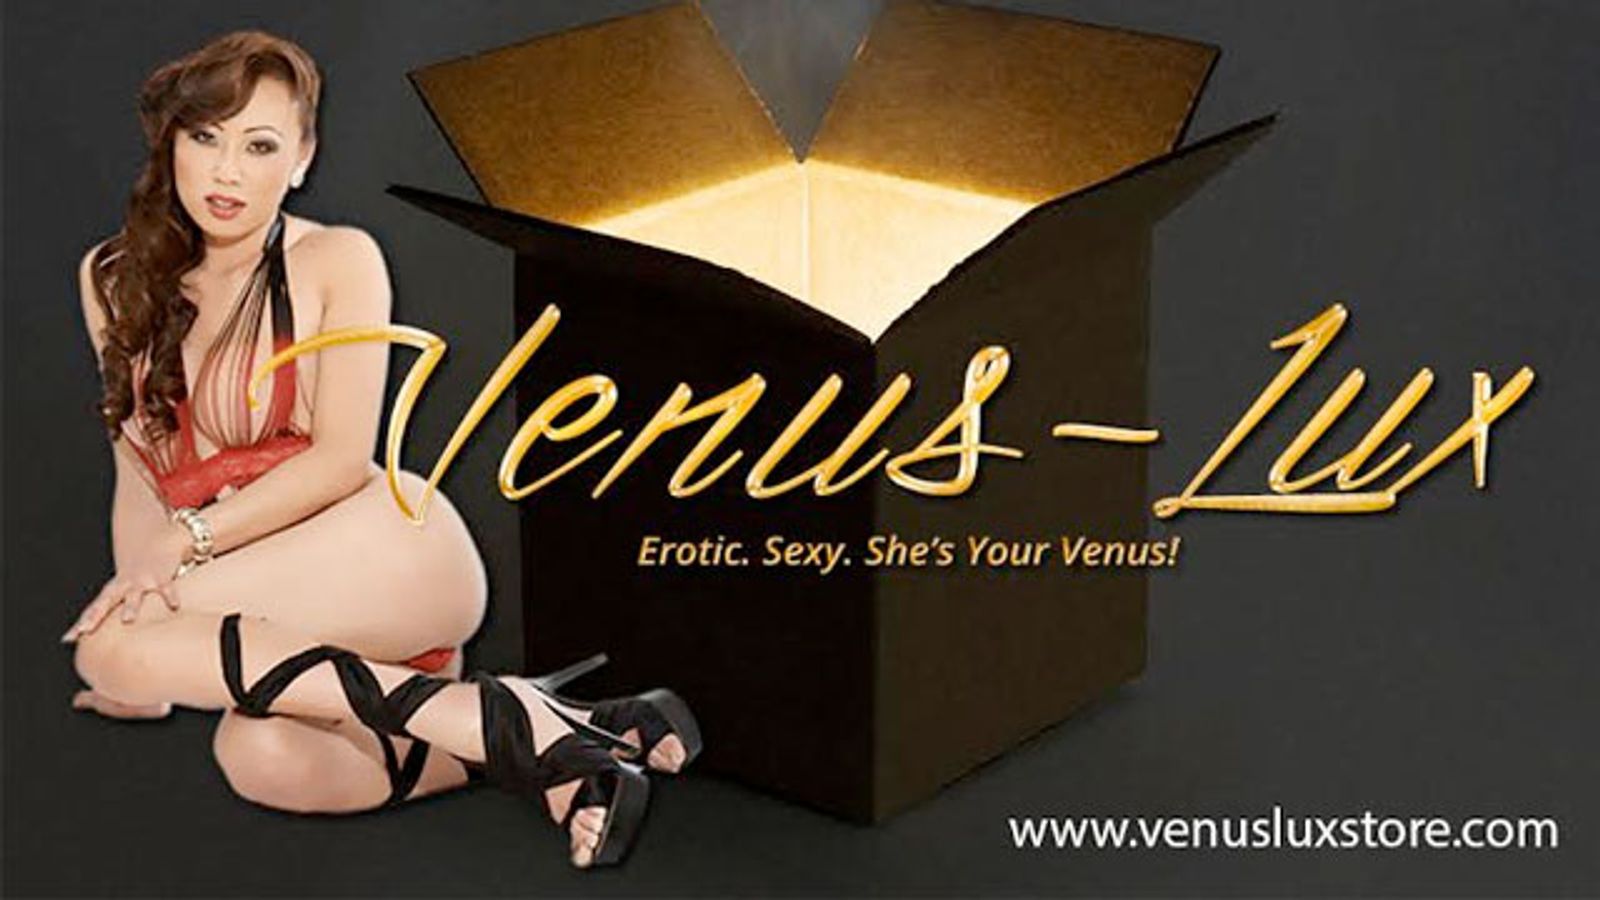 Venus Lux Offering Fans a Look Inside Venus' Box